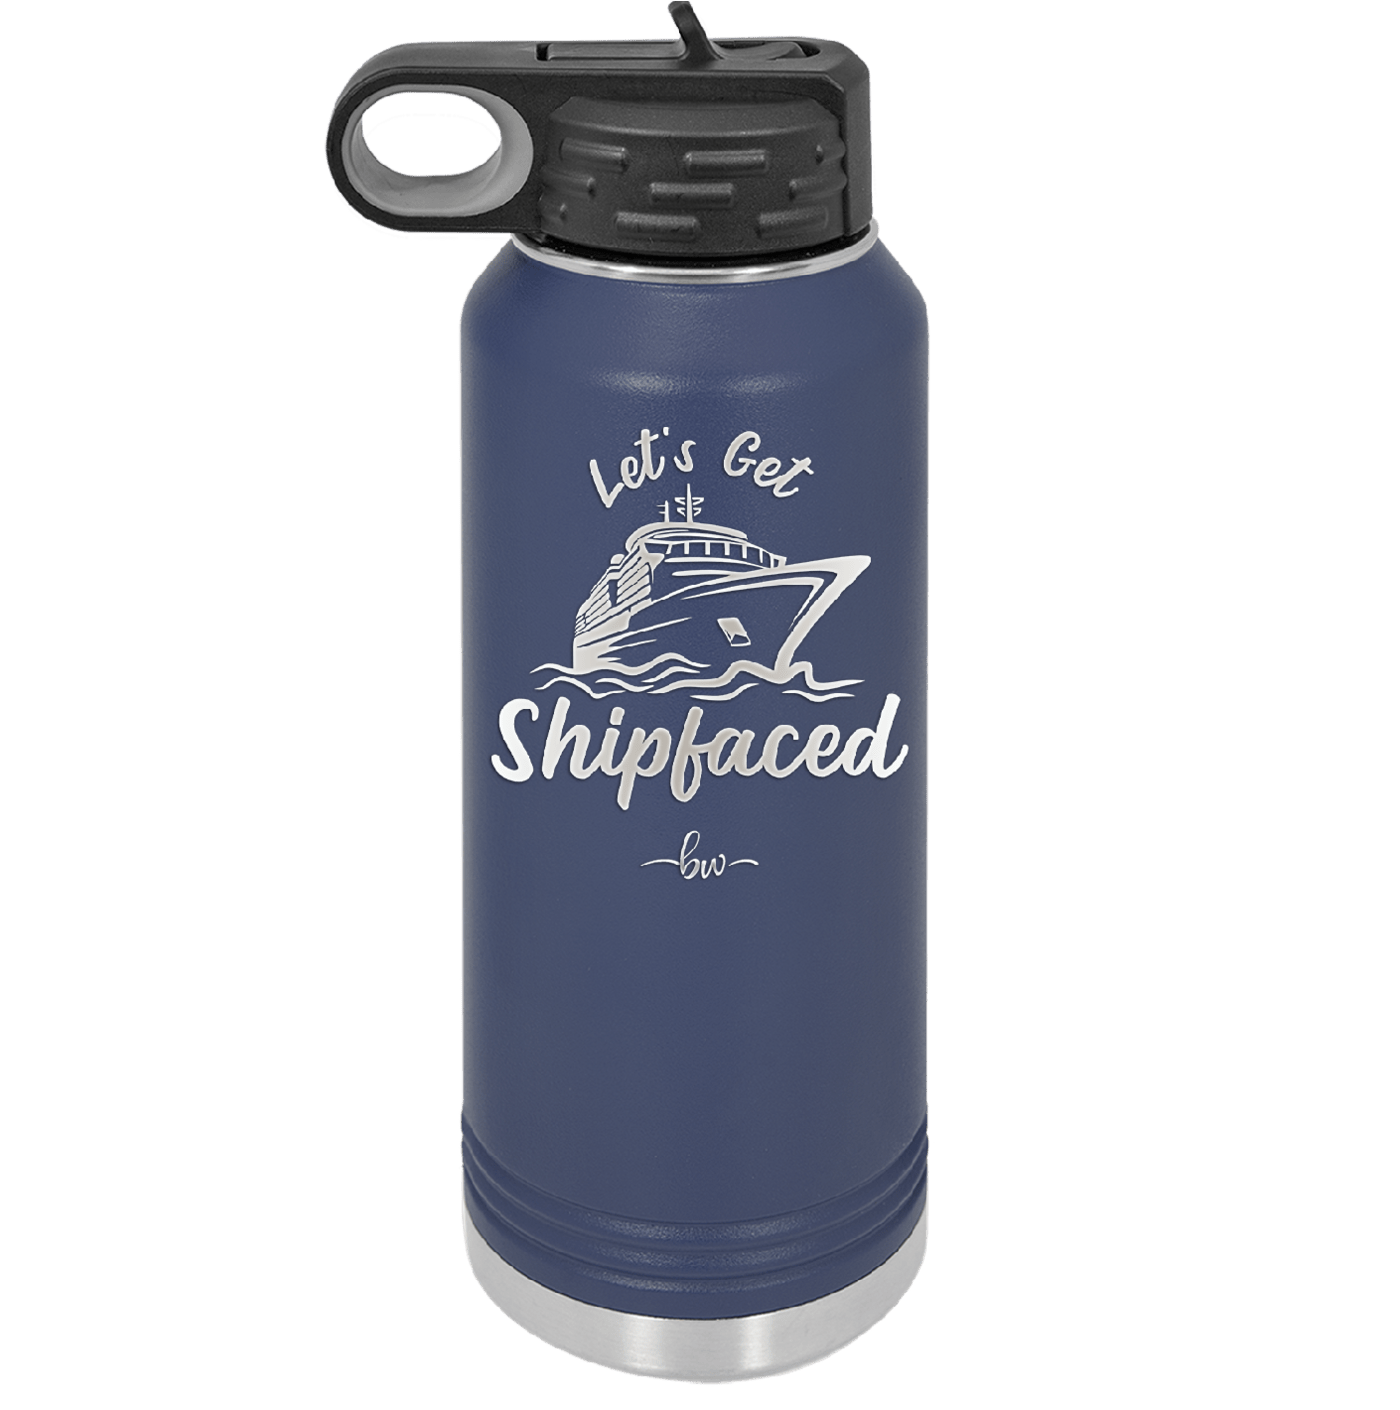 Let's Get Ship Faced 2 - Laser Engraved Stainless Steel Drinkware - 1413 -